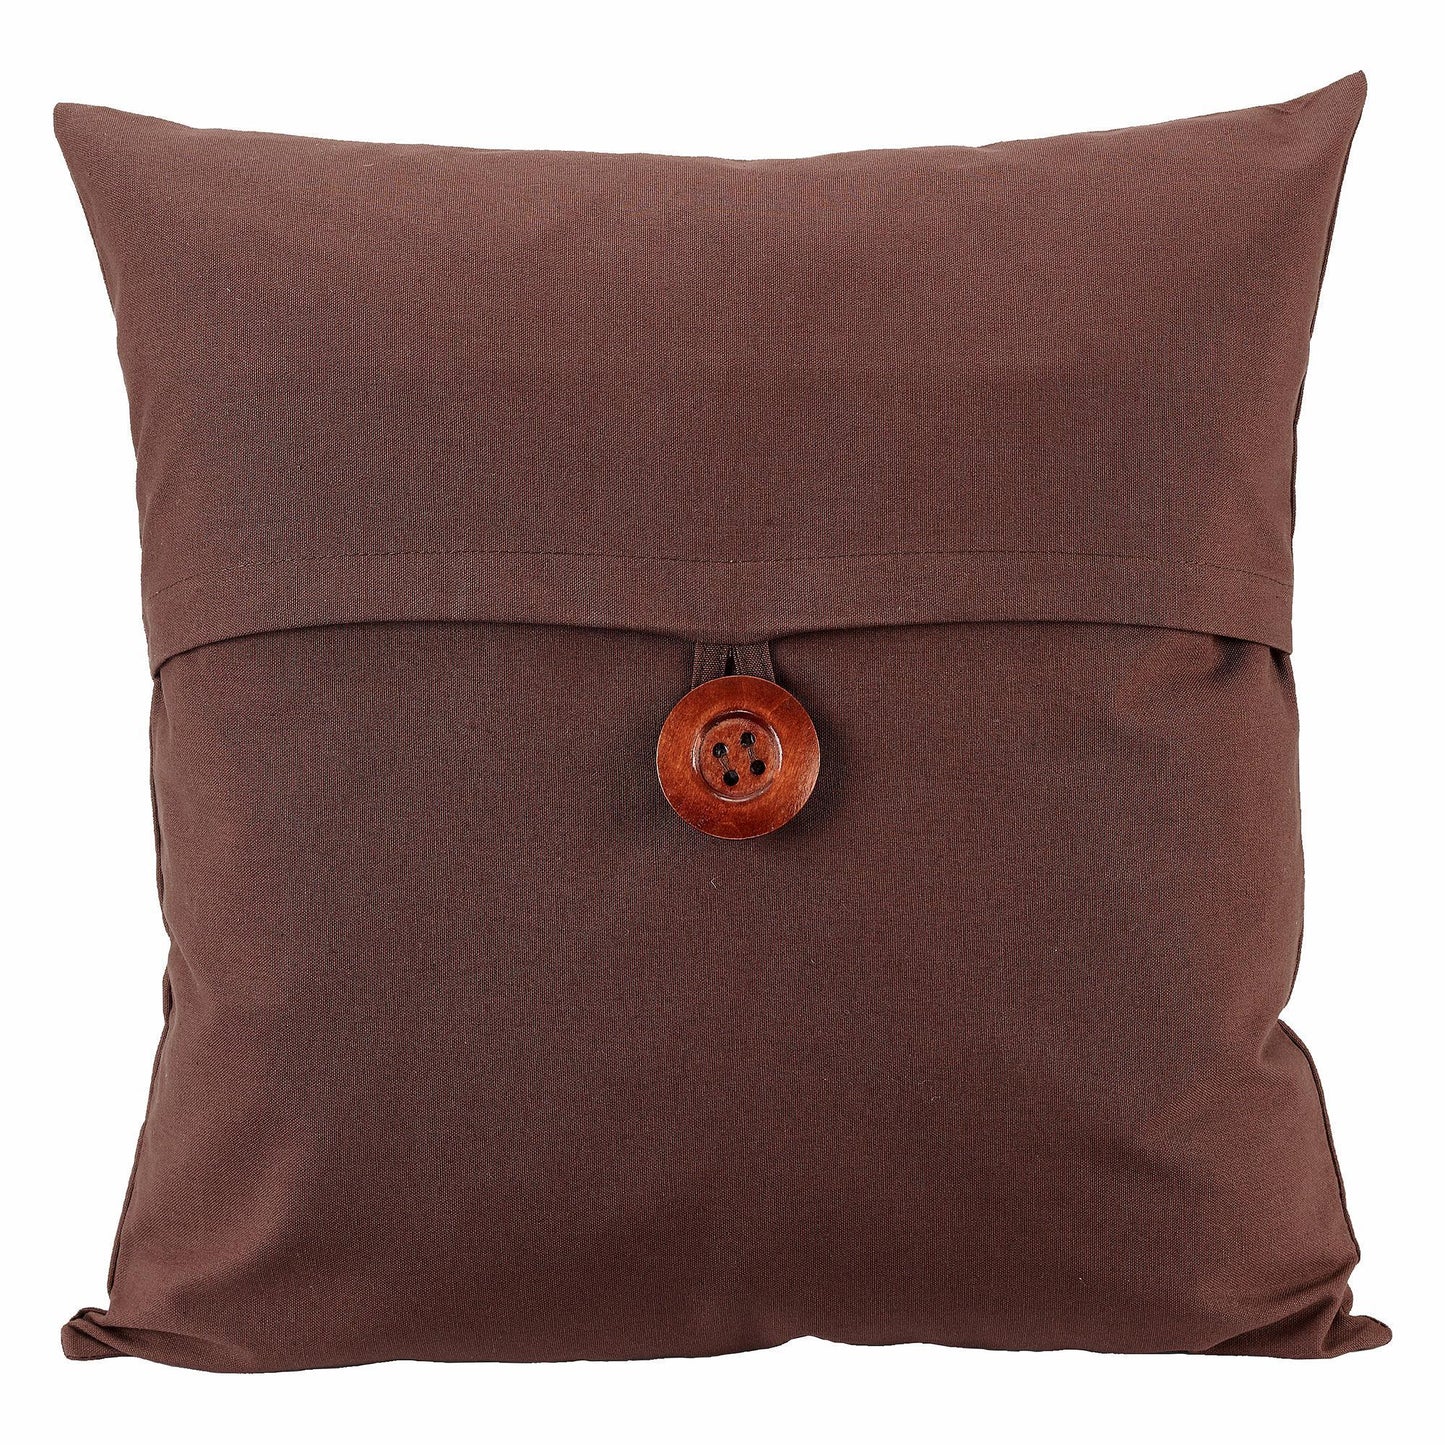 Brown Envelope Decorative Pillow - Wild Wings